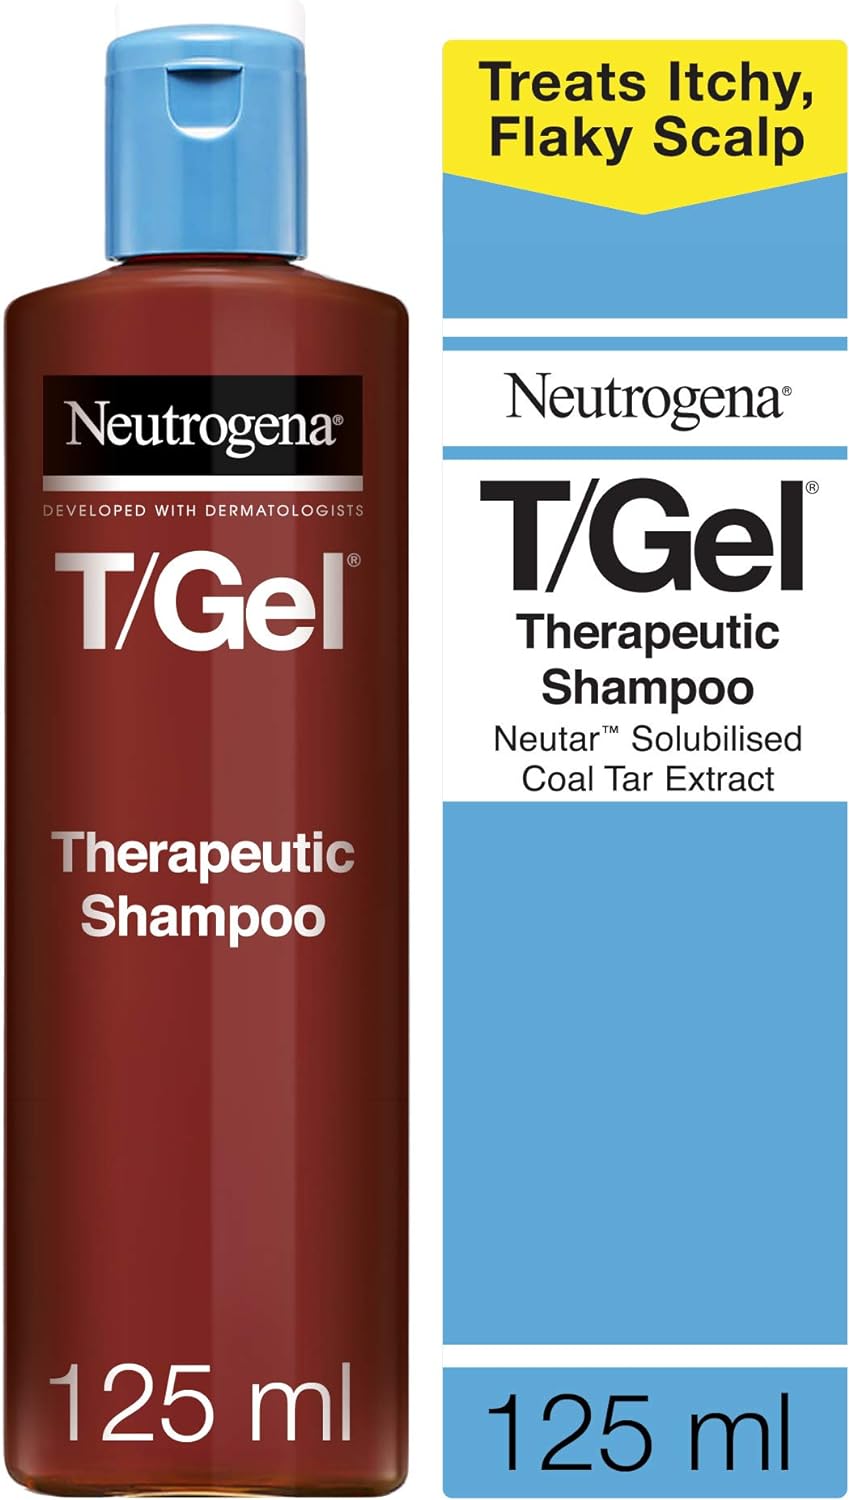 Neutrogena T/Gel Therapeutic Shampoo Treatment for Scal